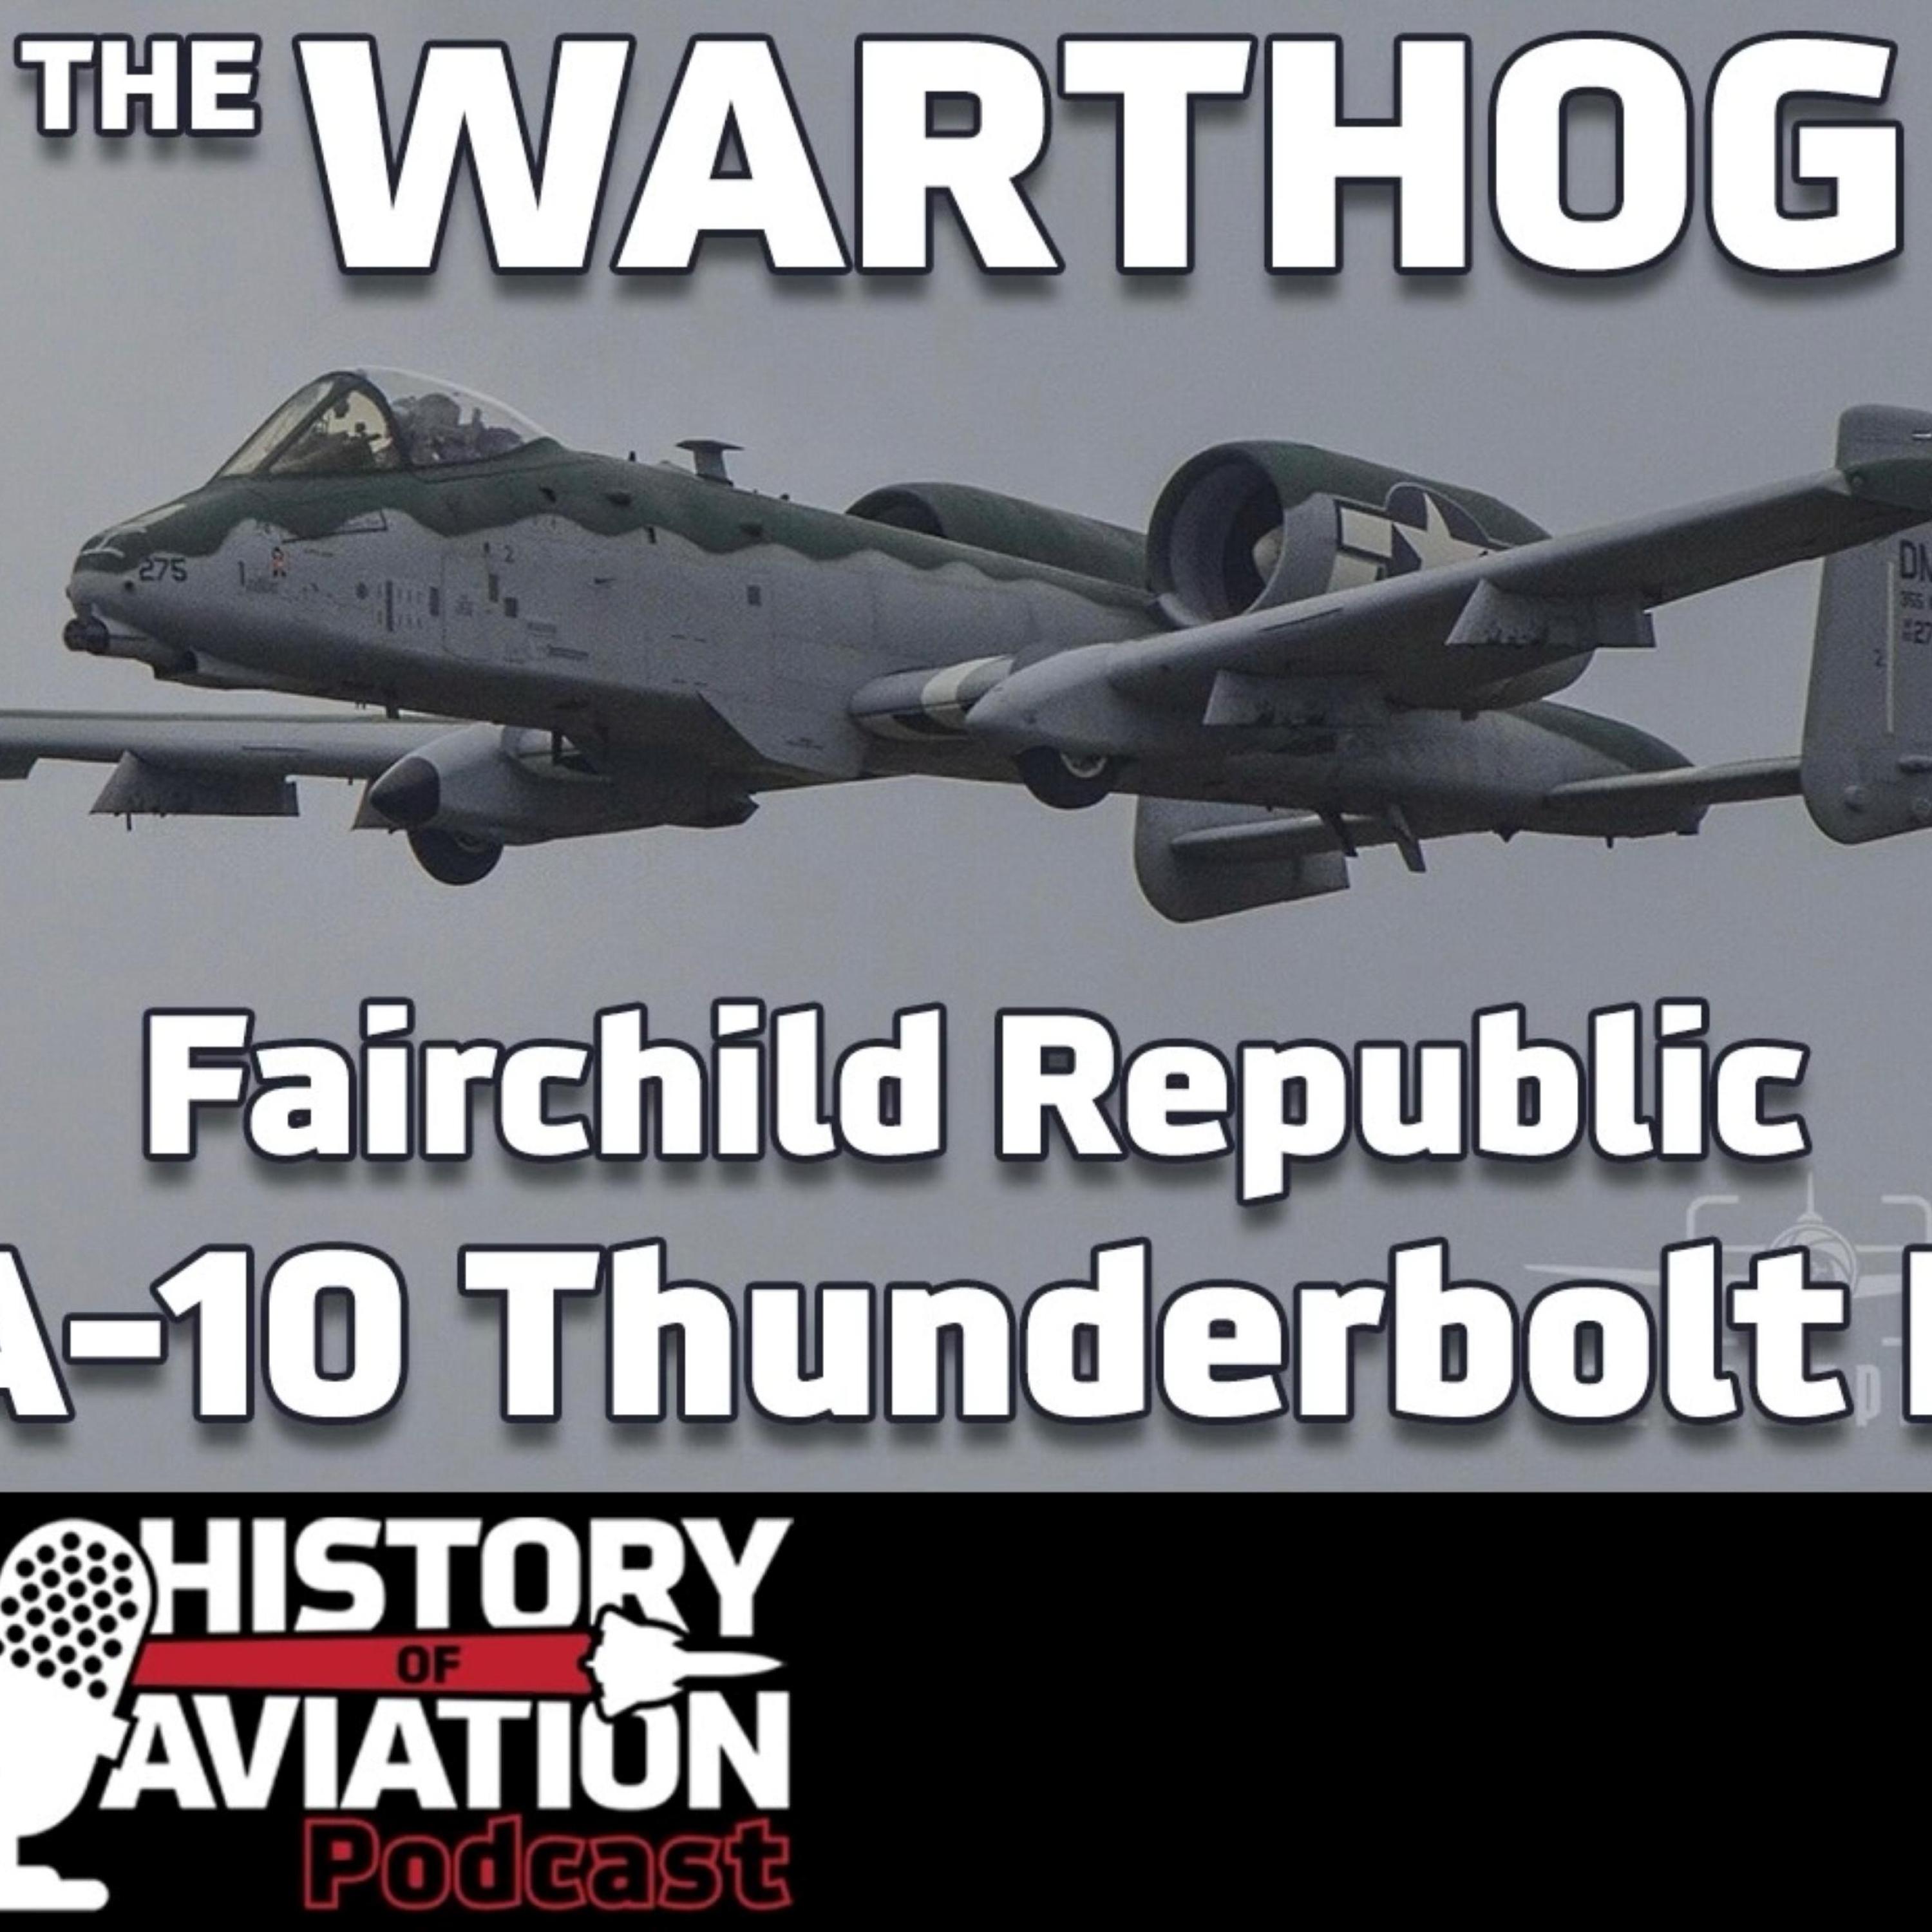 The A-10 Warthog Thunderbolt II